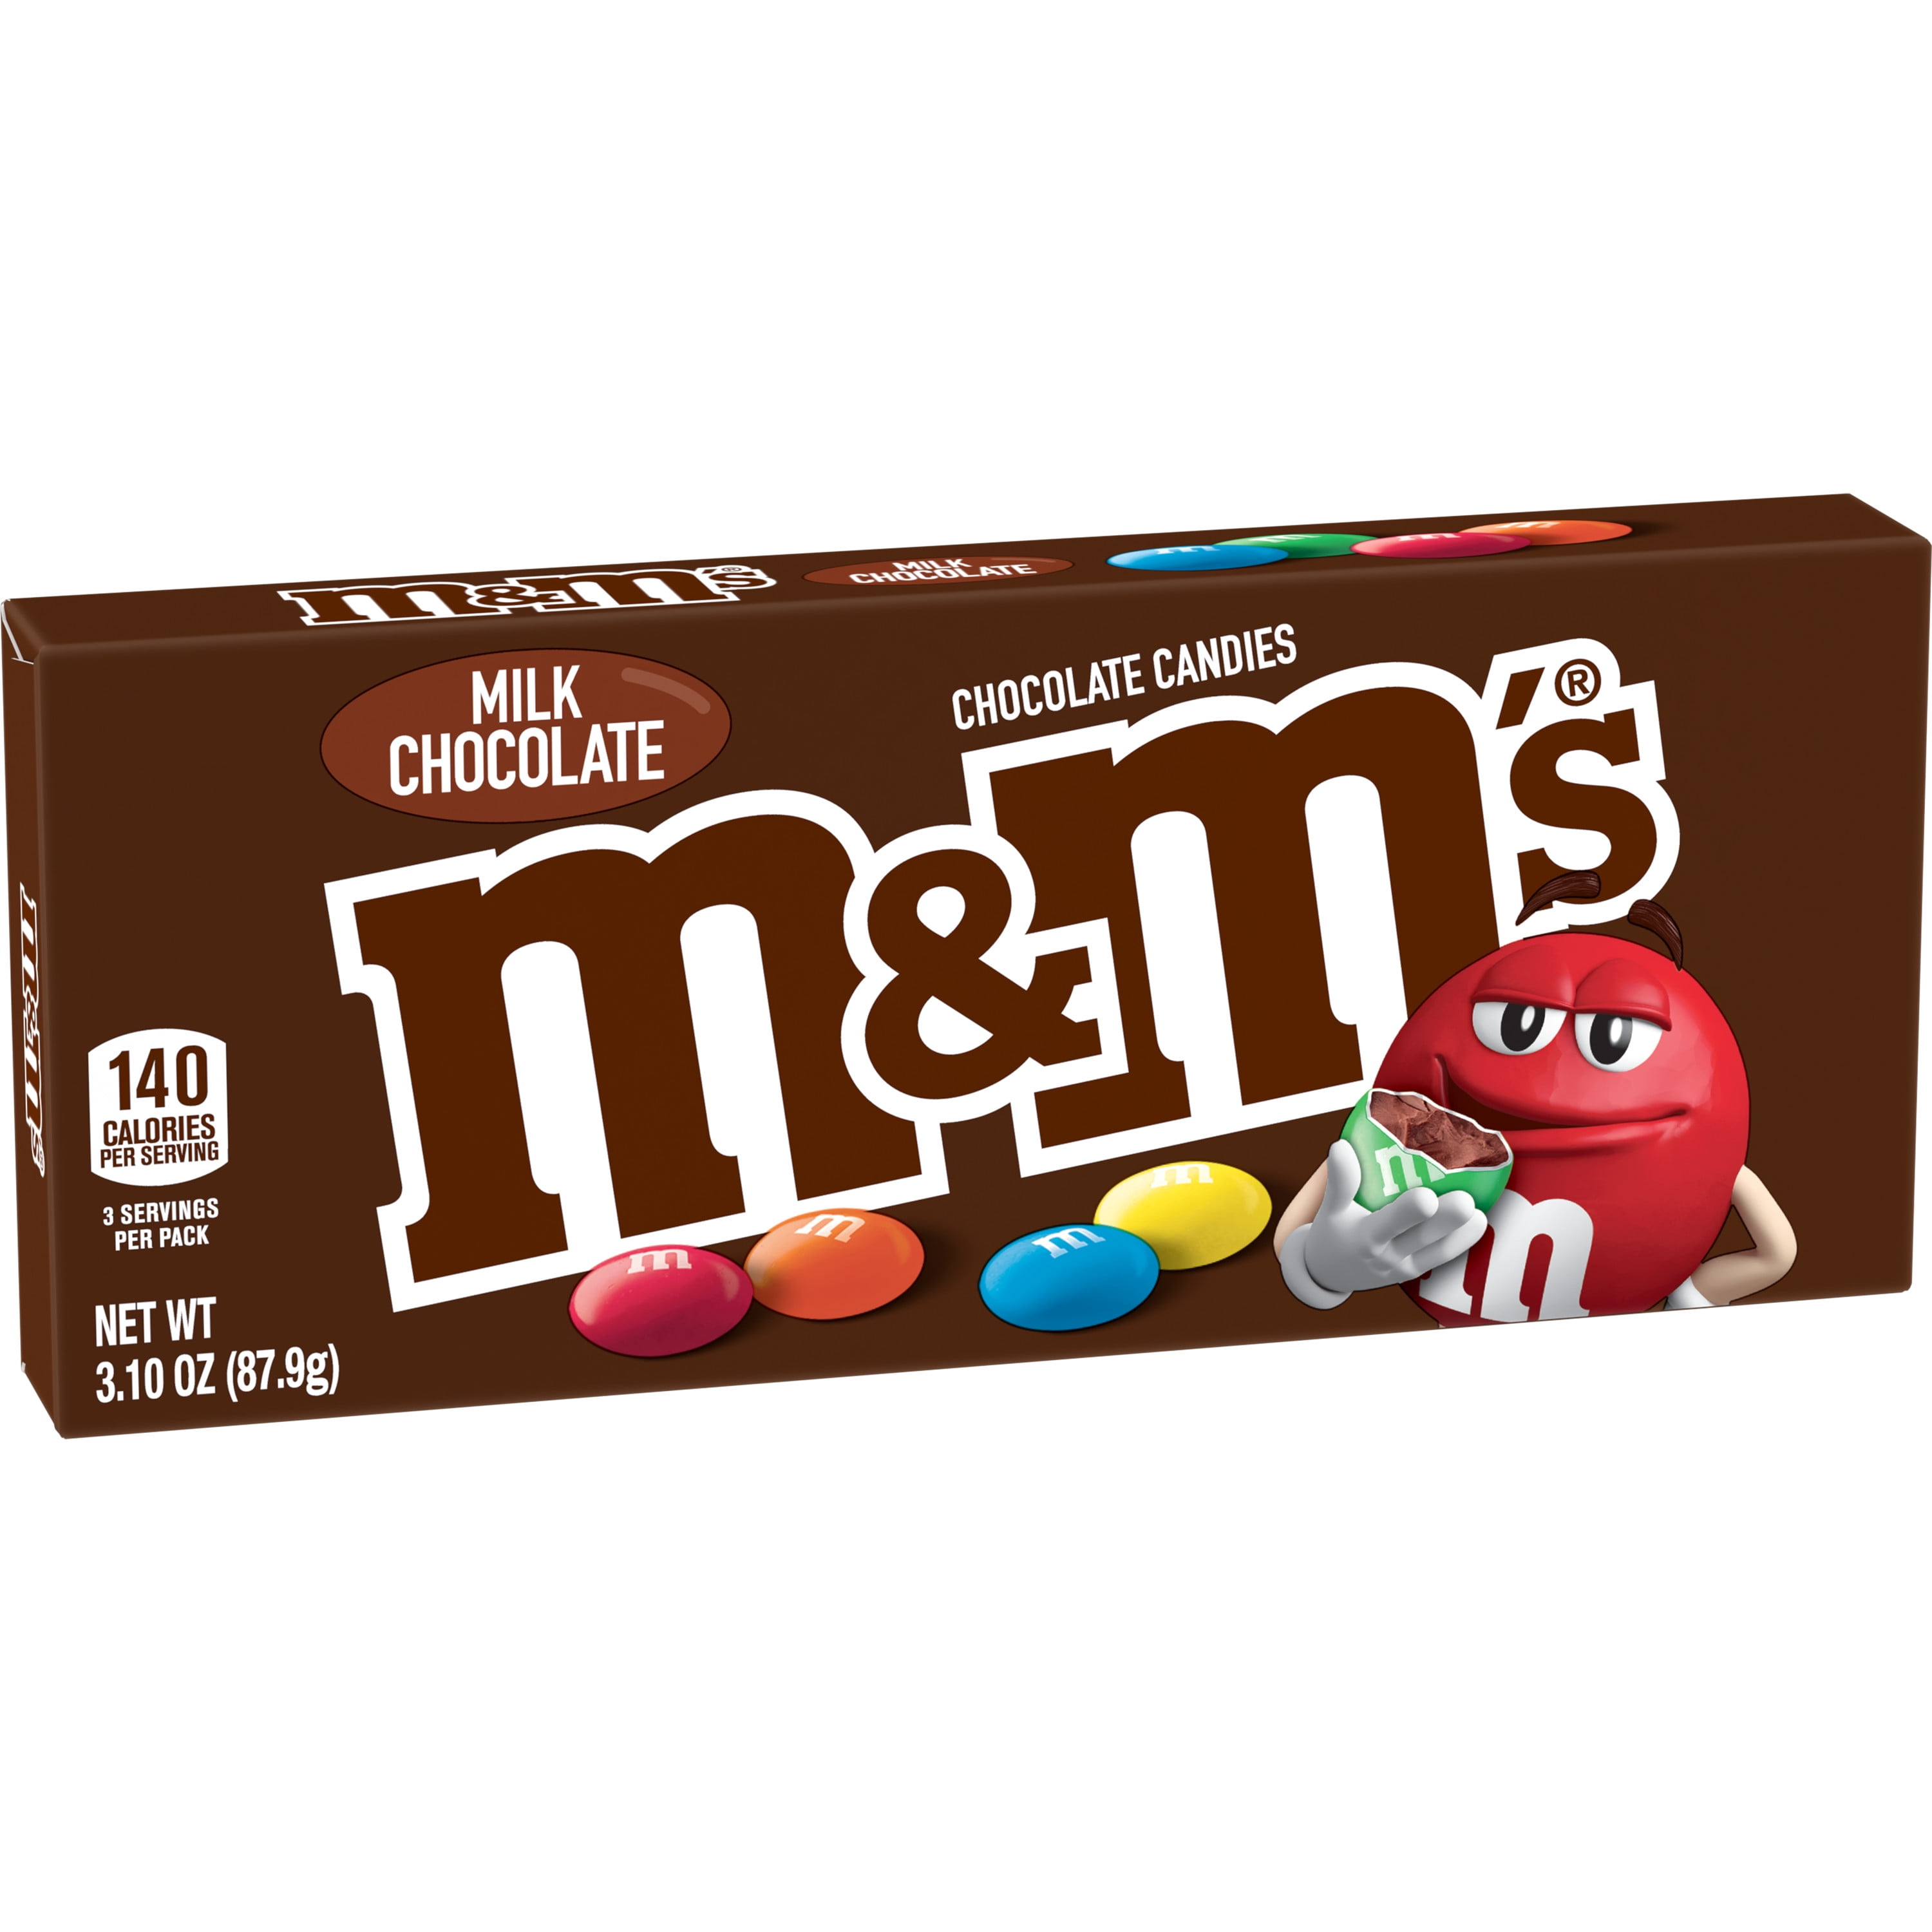 M&M's Chocolate Candies, Milk Chocolate - 3.10 oz